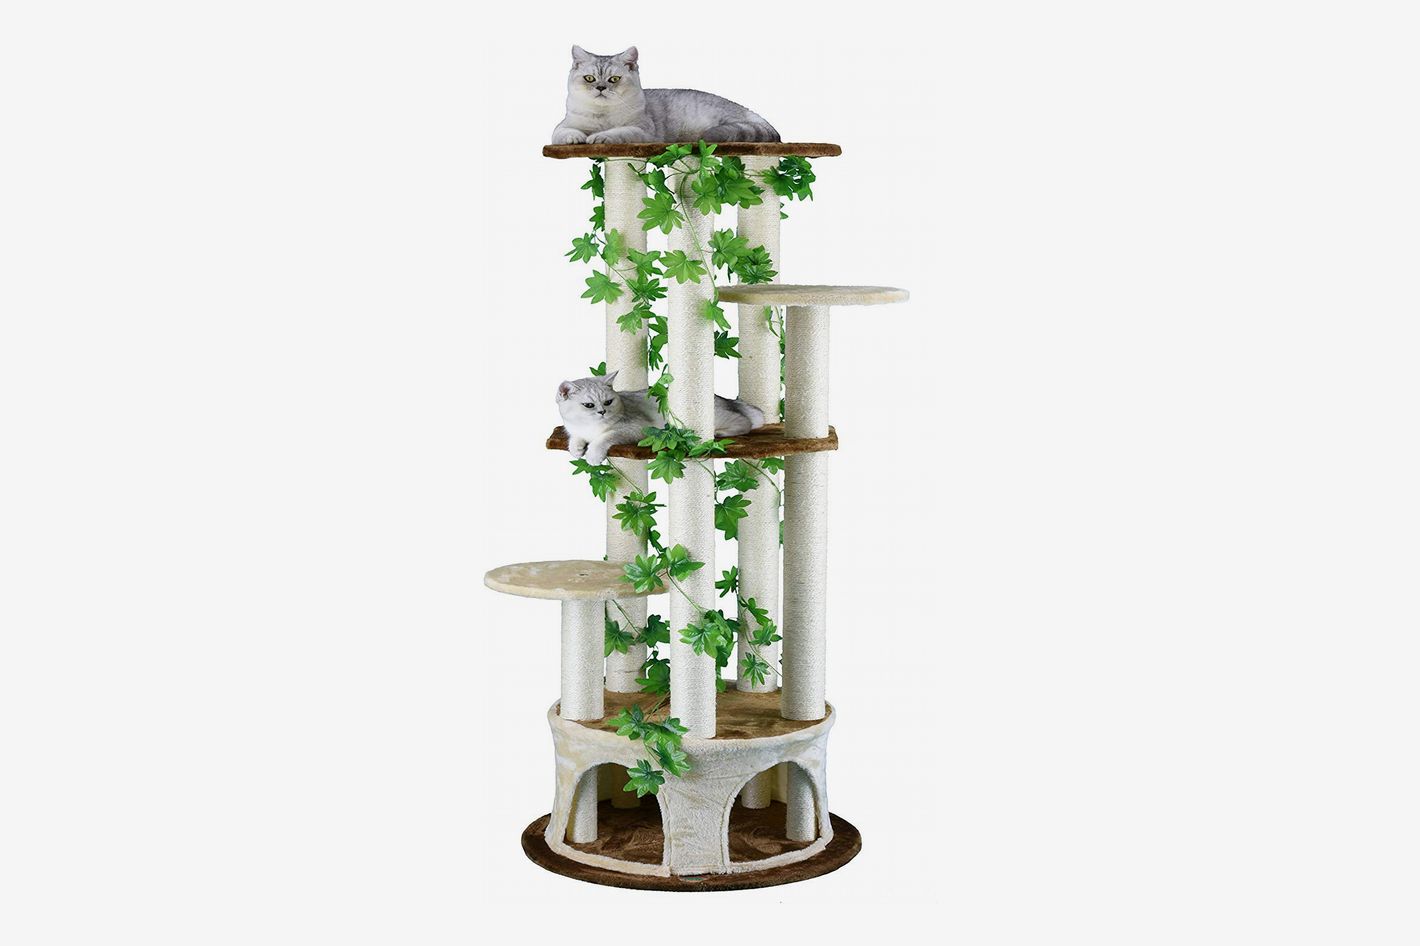 Go Pet Club Cat Tree